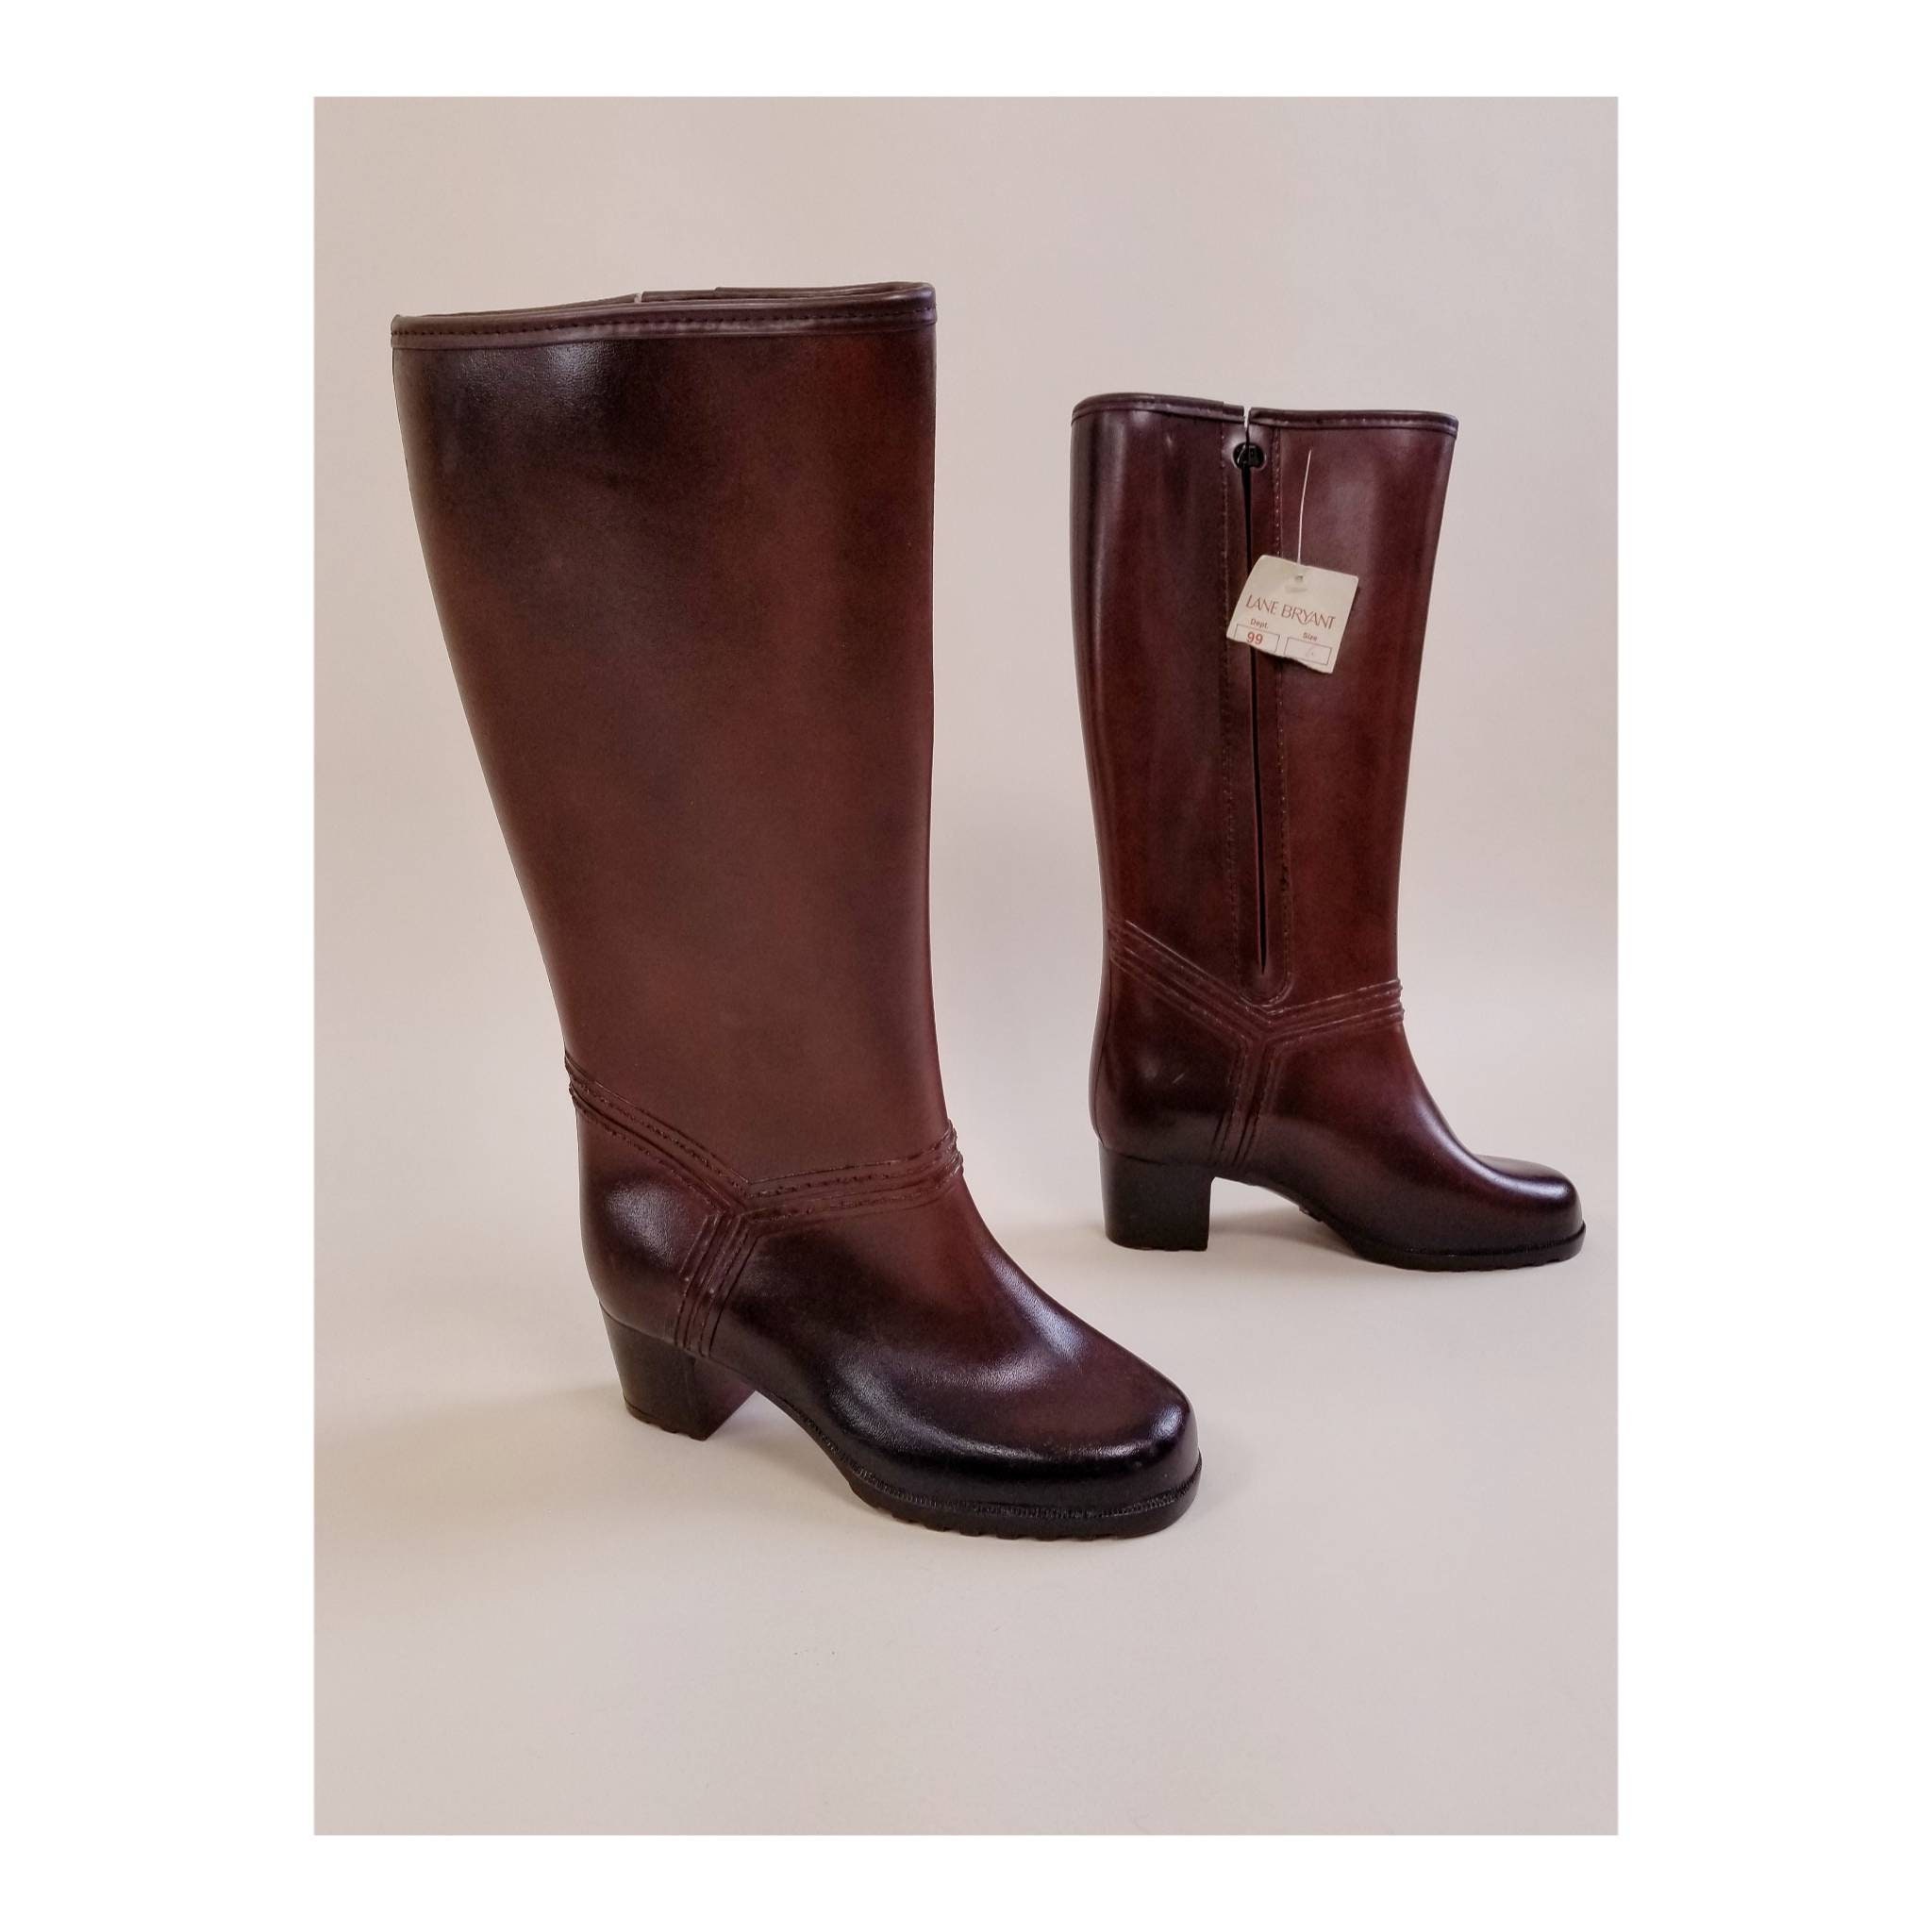 Shoes Womens Shoes Boots Rain & Snow Boots UK Size 5. Vintage 1960's Snow Queen Long Grey Suede Boots 